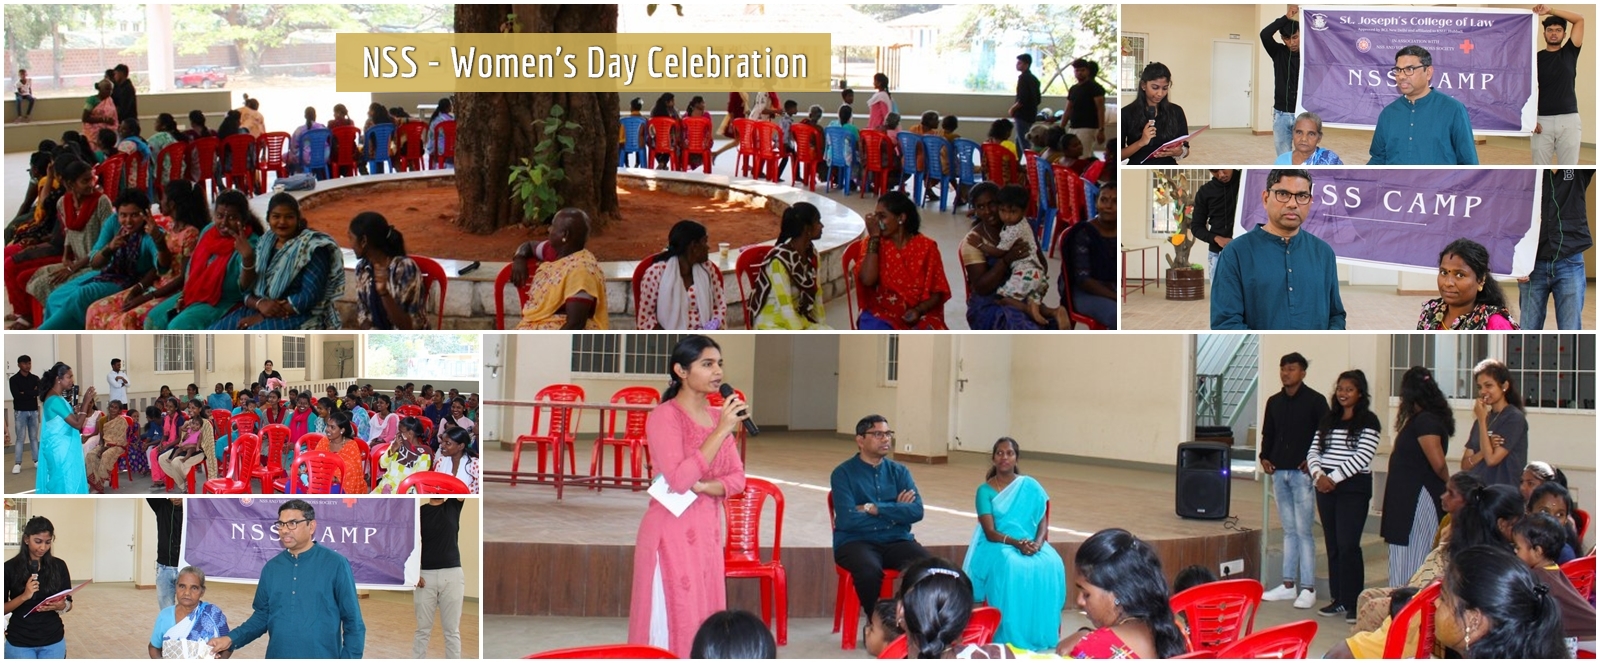 NSS - Women's Day Celebration